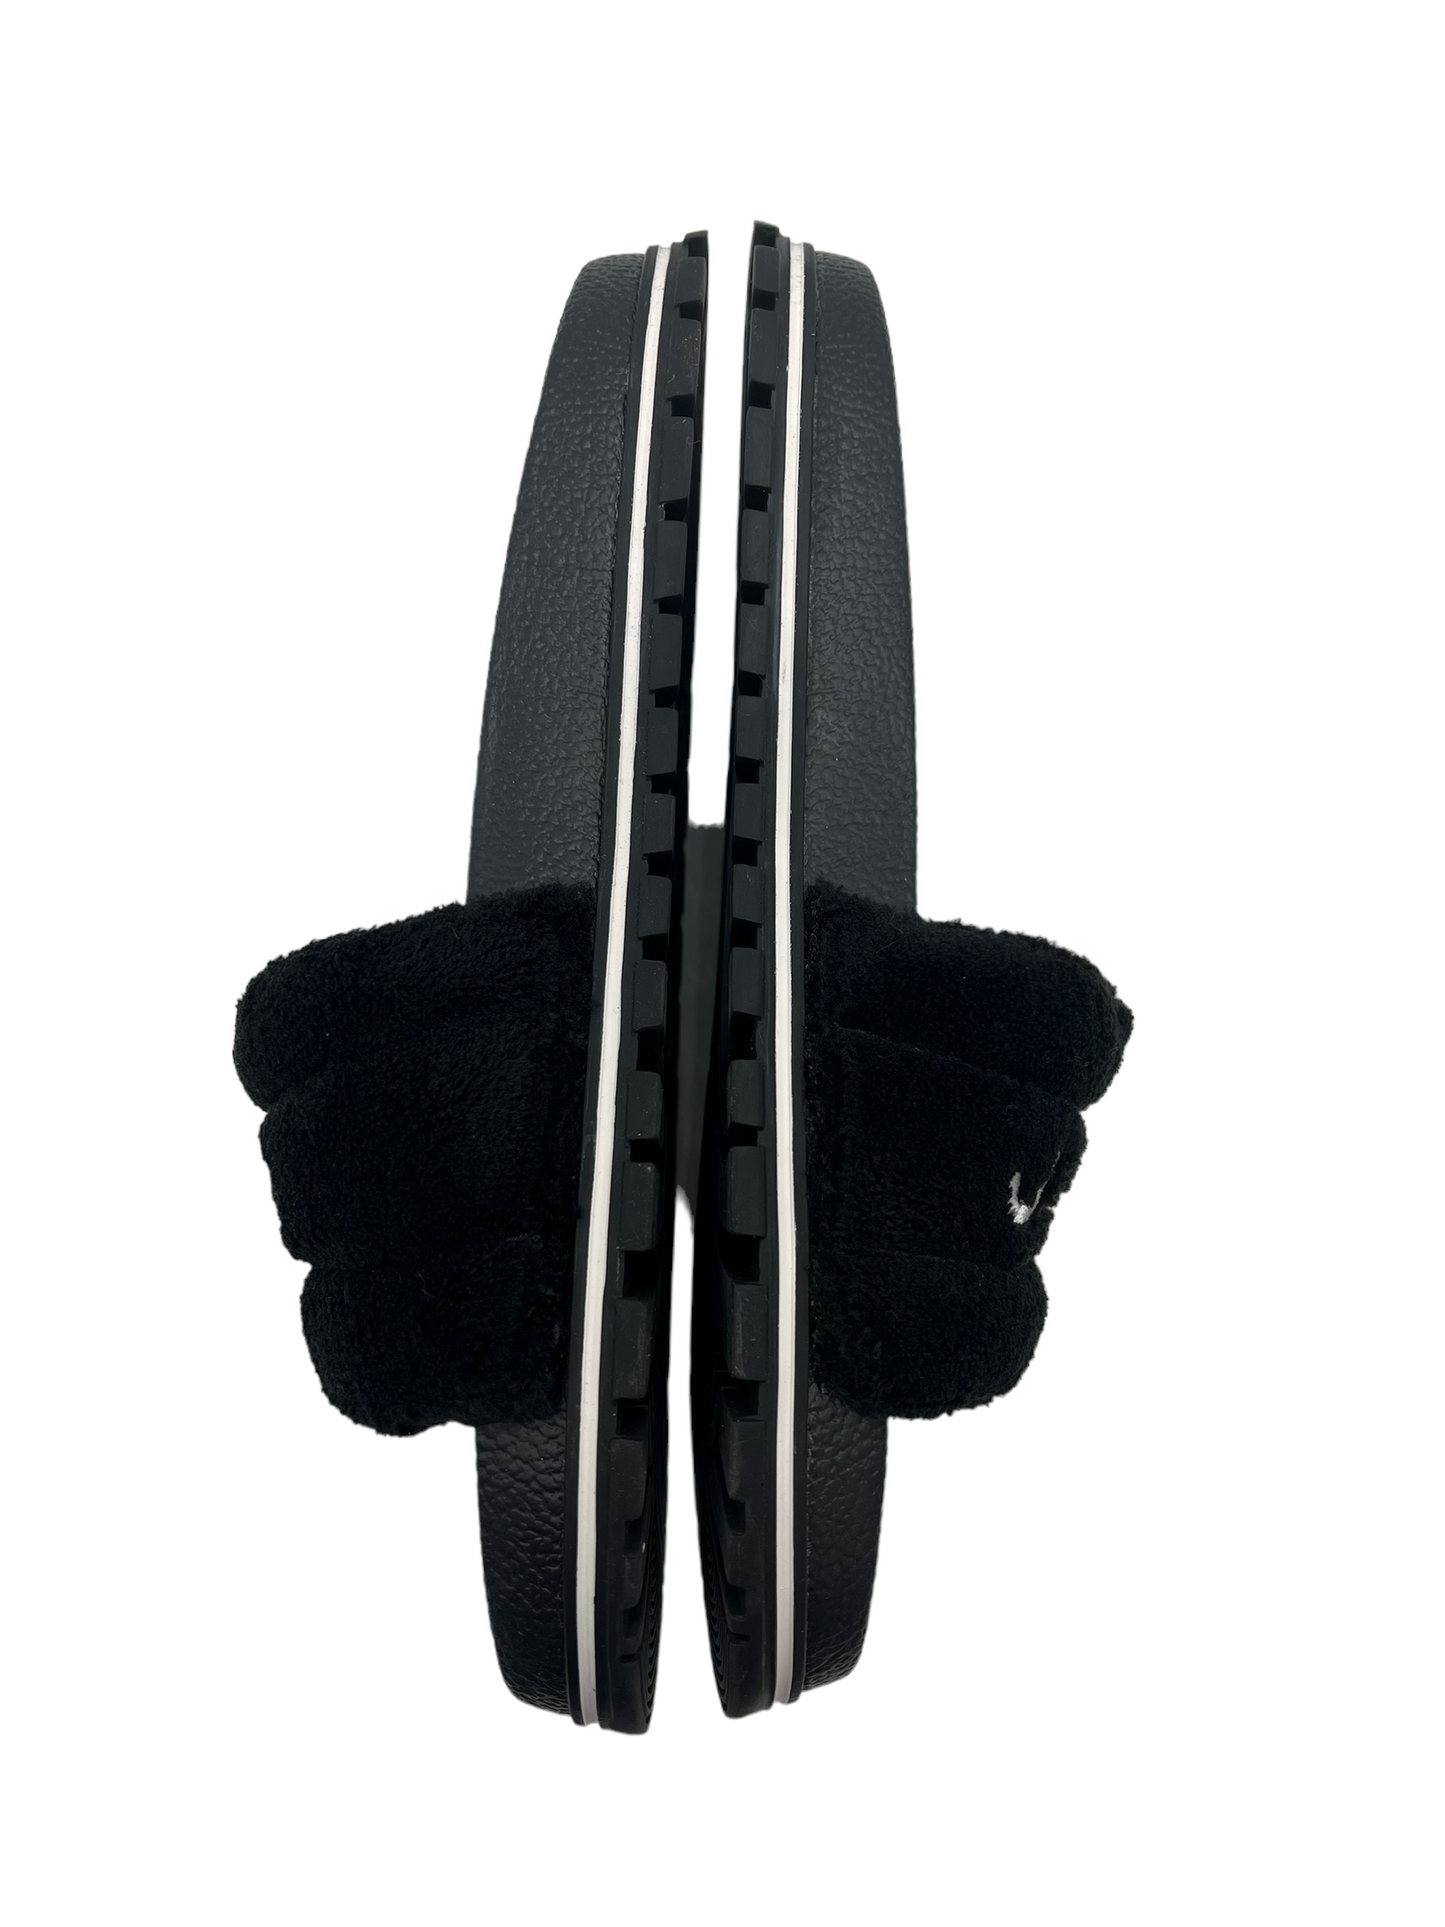 Marc Jacobs Black & White "The Slide" Size 41 Sandals